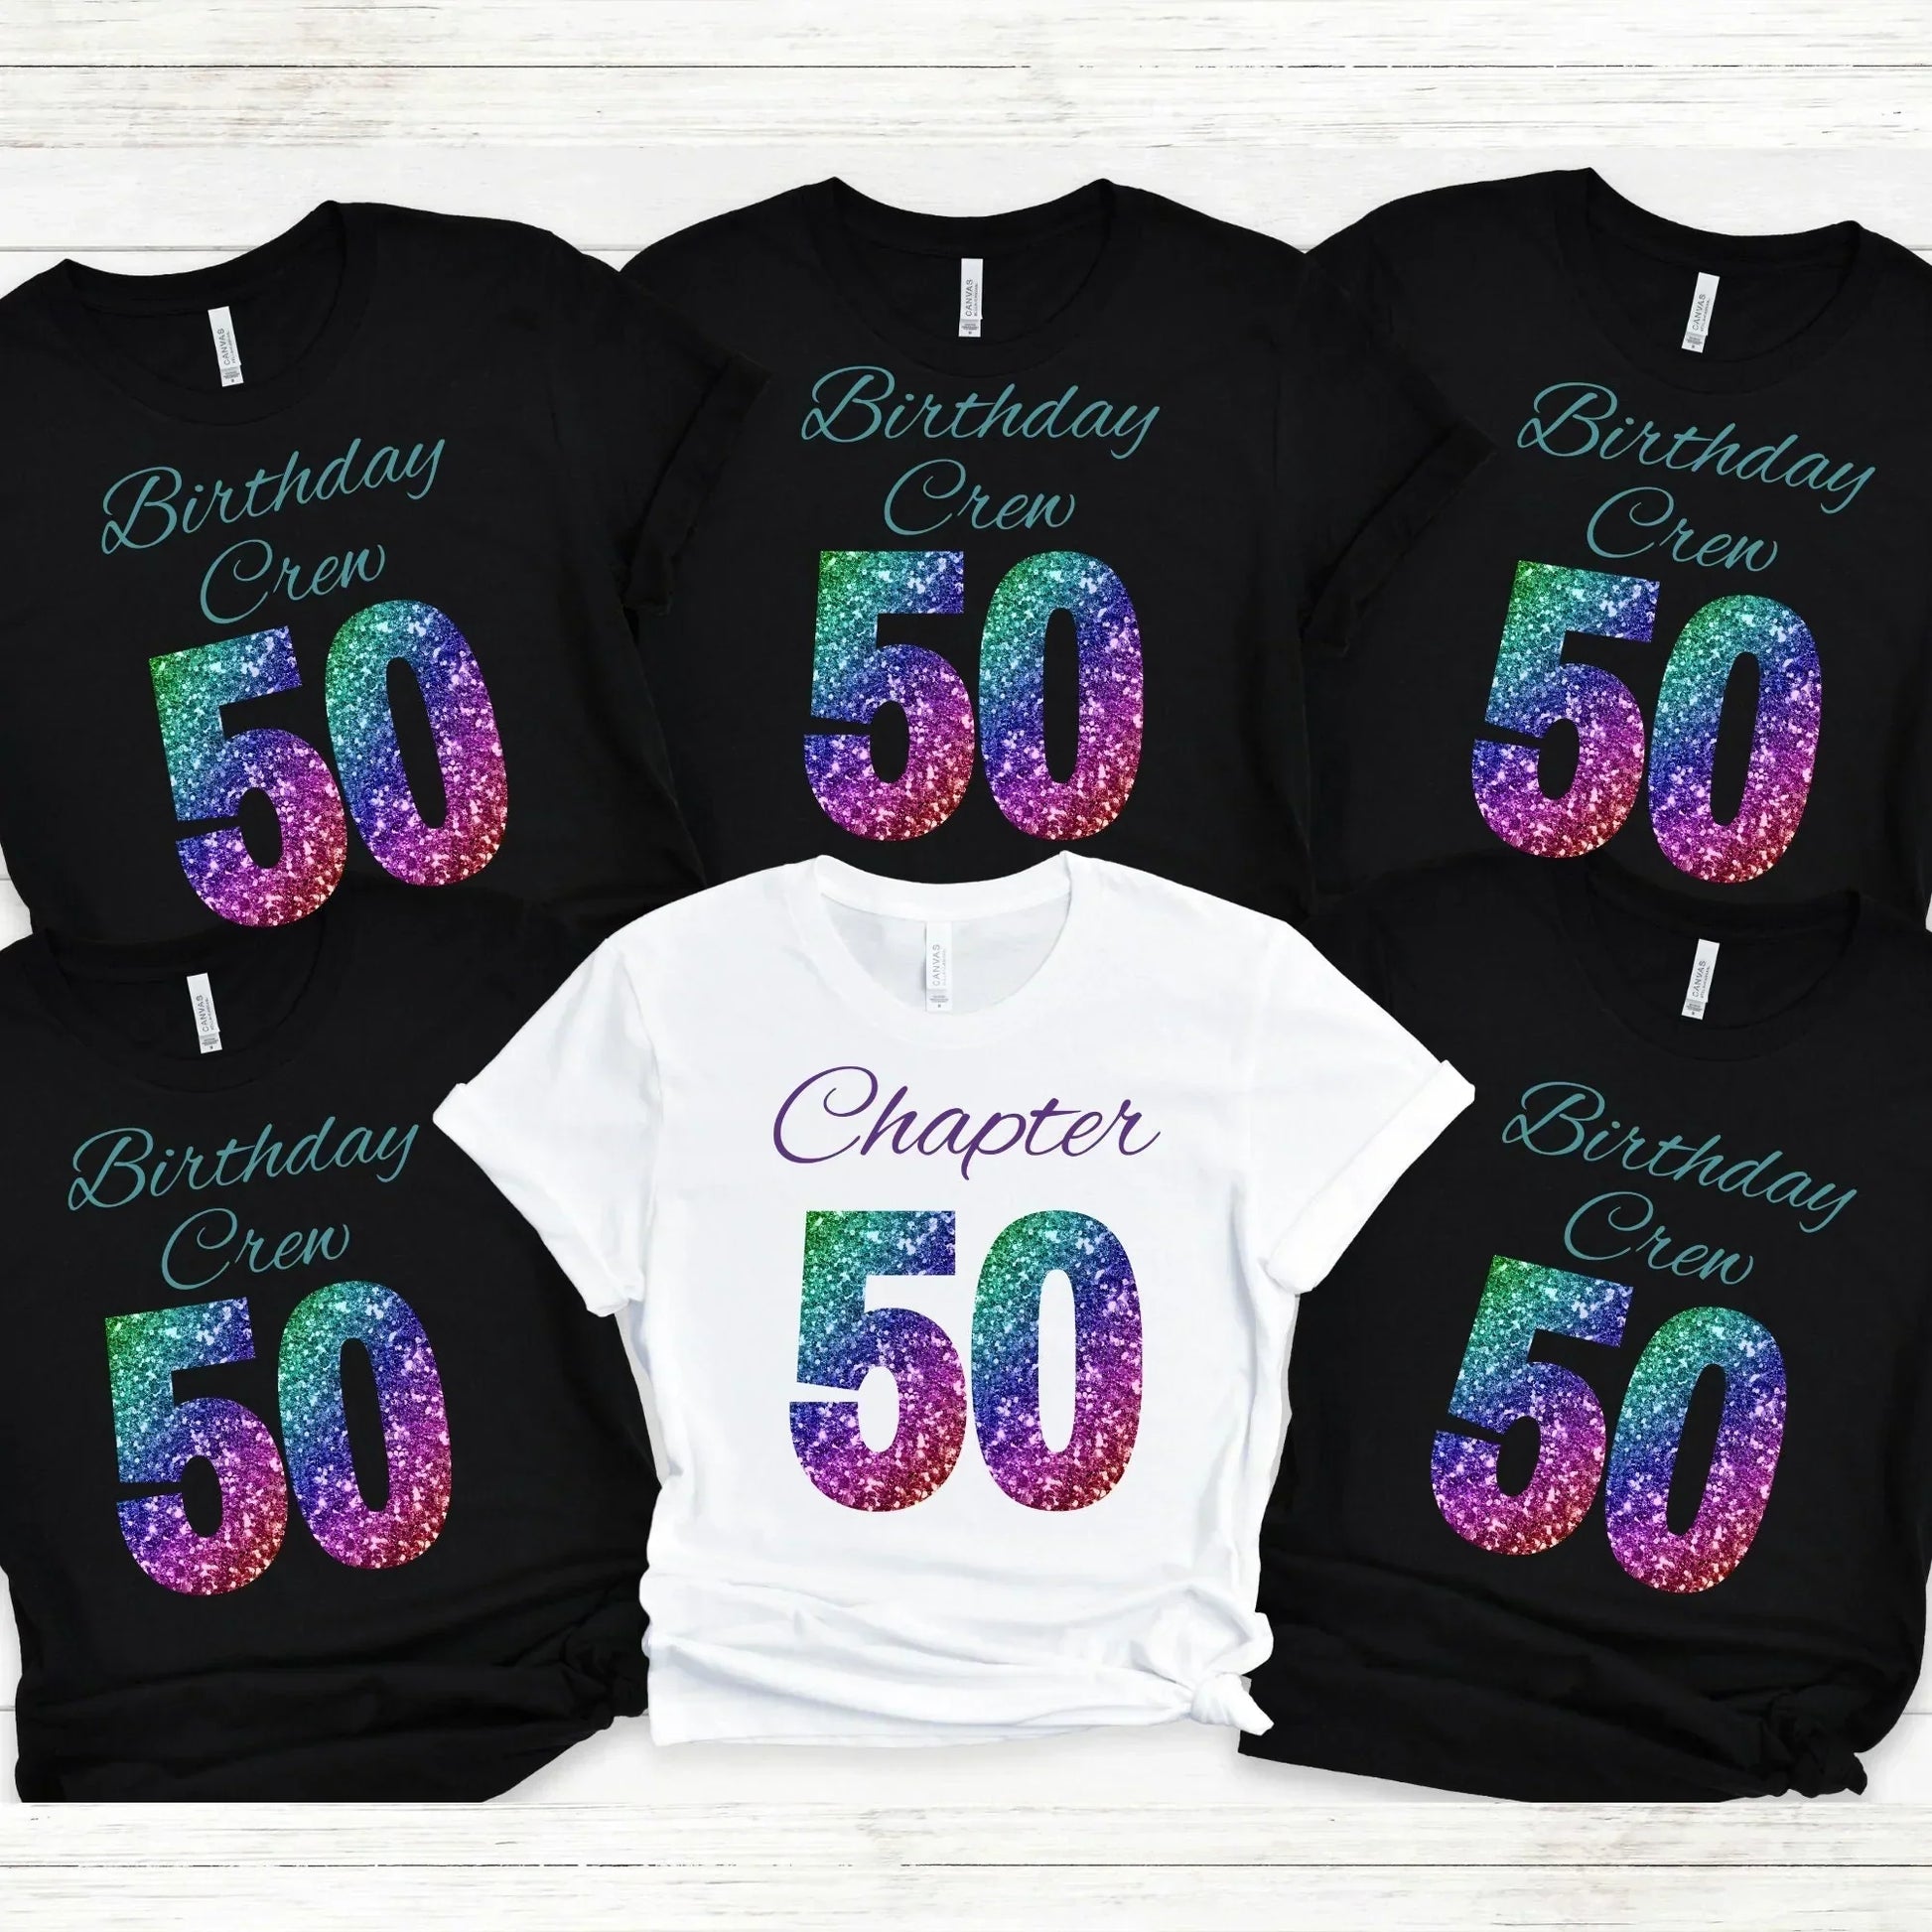 Rainbow Sparkly 50th Birthday Shirts, 50th Birthday Shirt - Celebrate Your Milestone in Style!